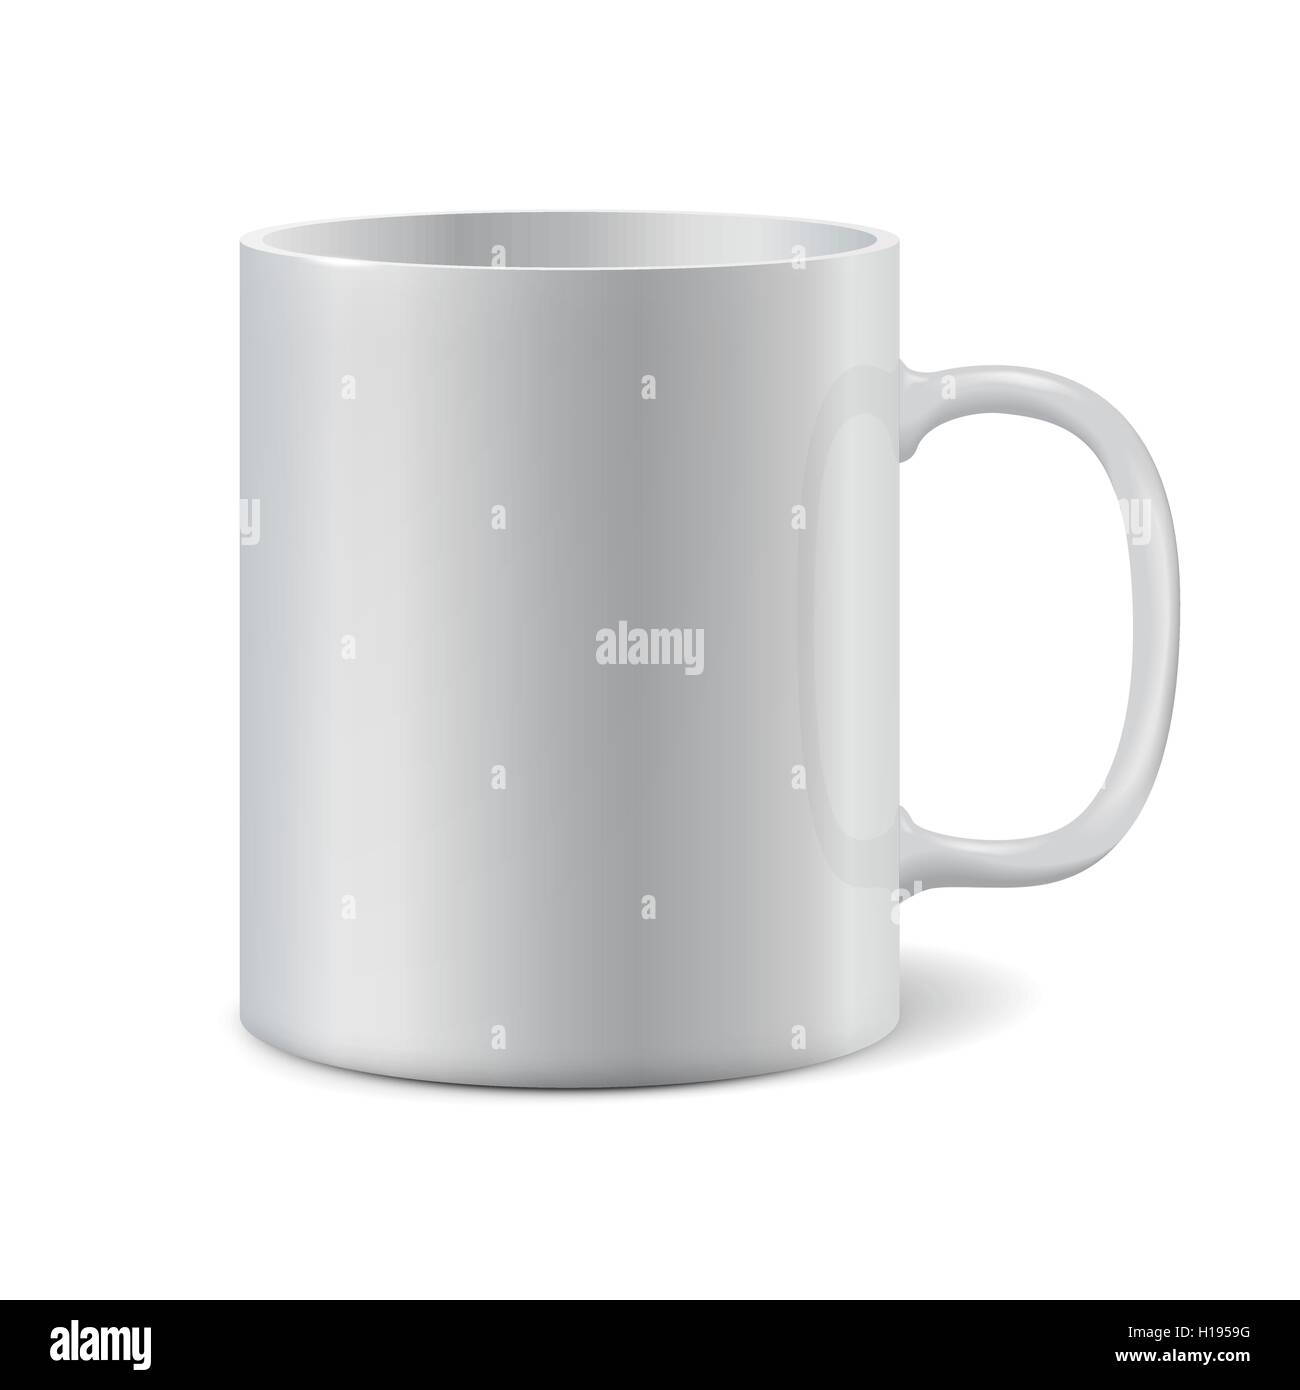 White ceramic mug for printing corporate logo Stock Vector